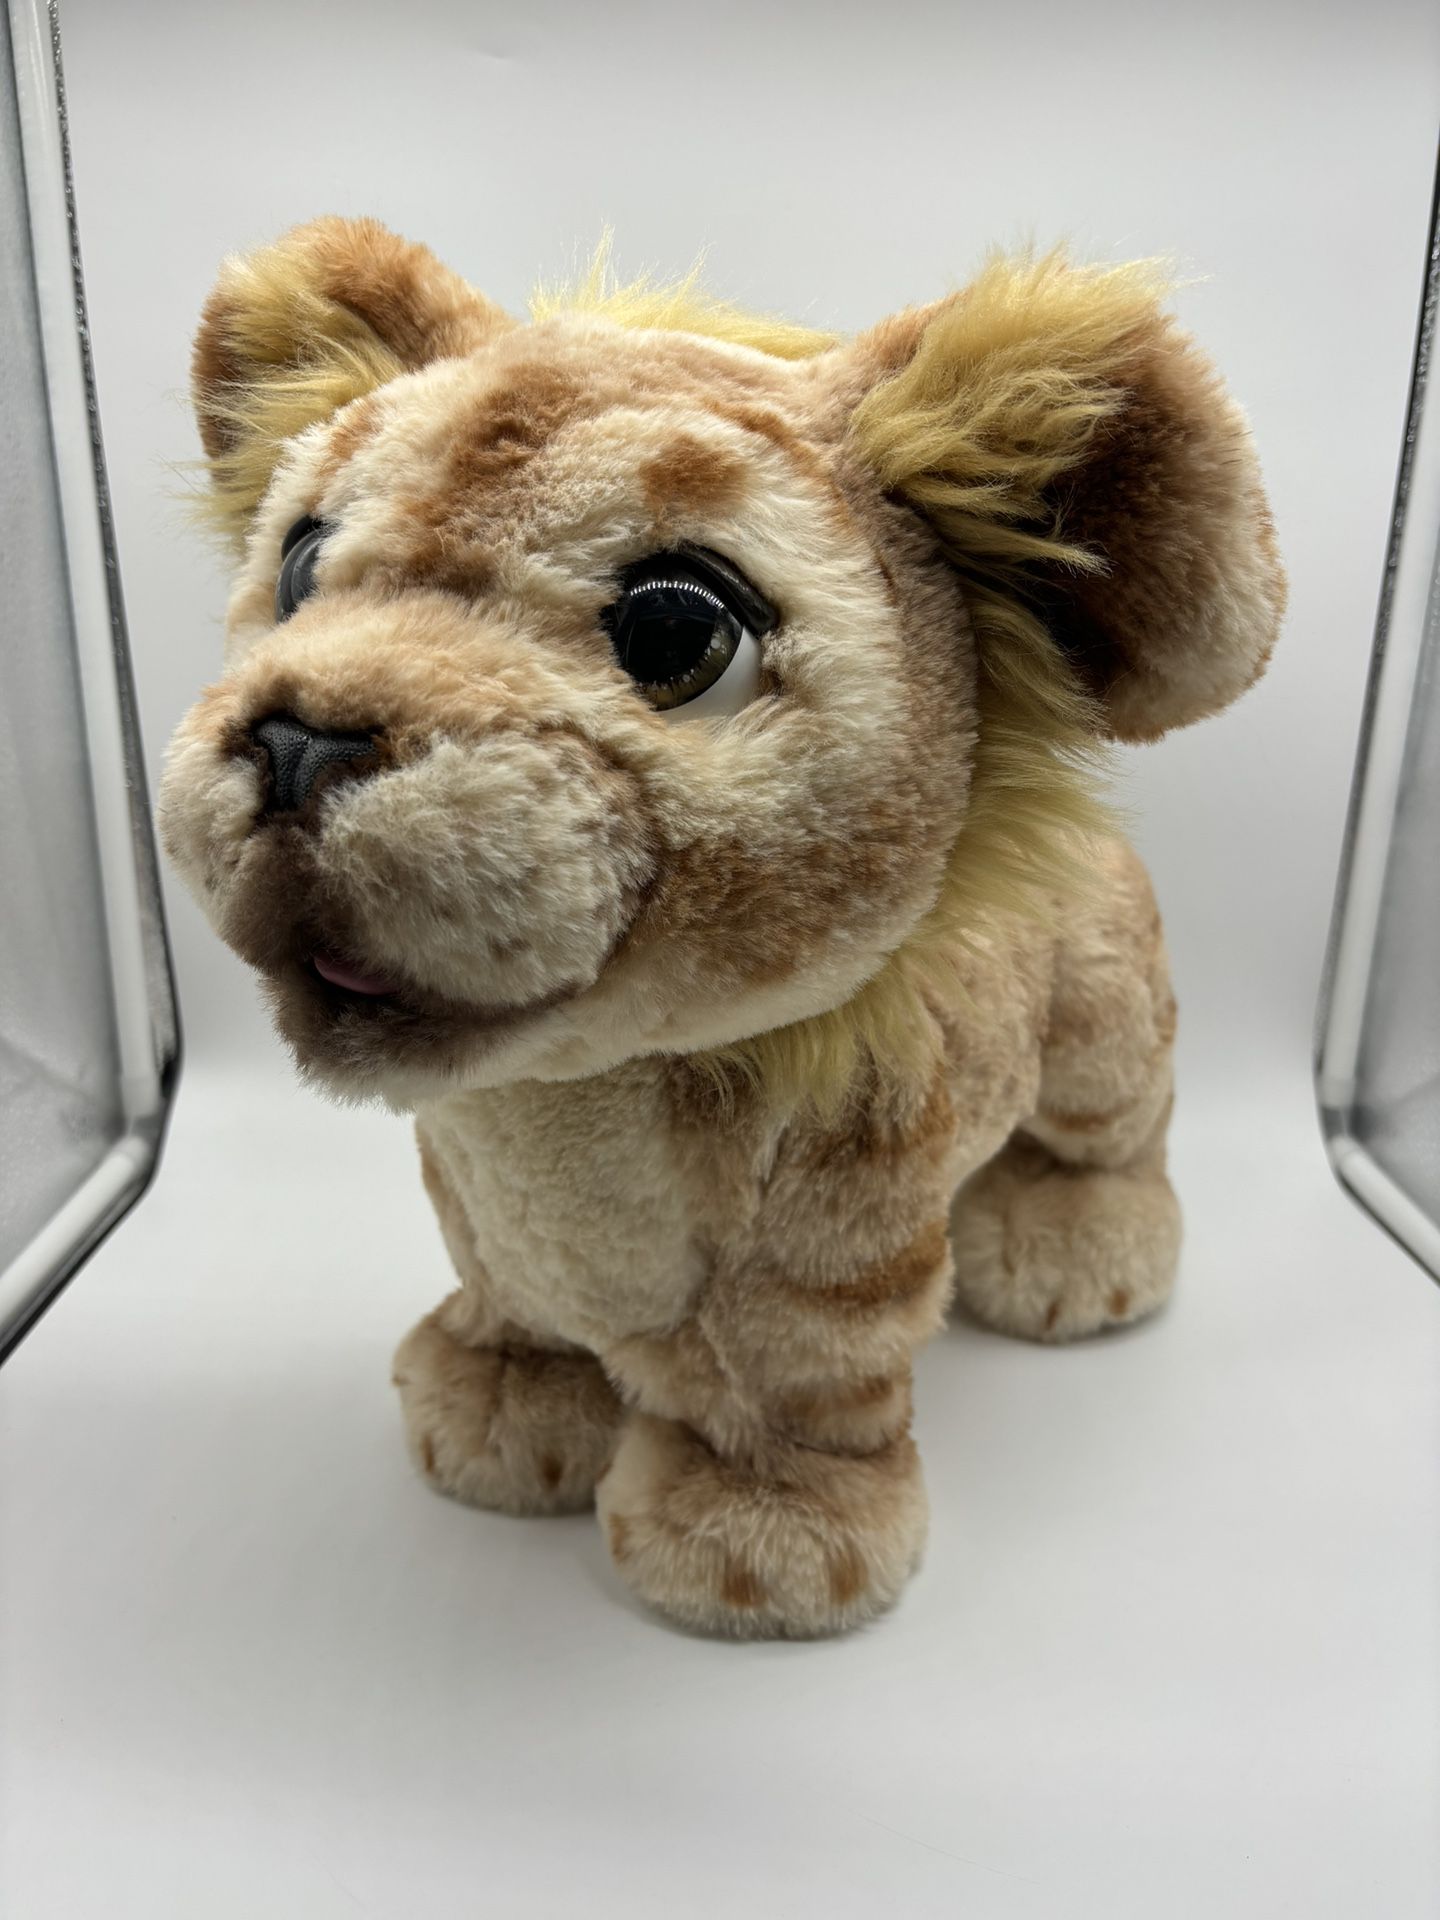 FurReal Friends Mighty Roar Simba Cub Lion King Robot Toy Hasbro Disney Working!